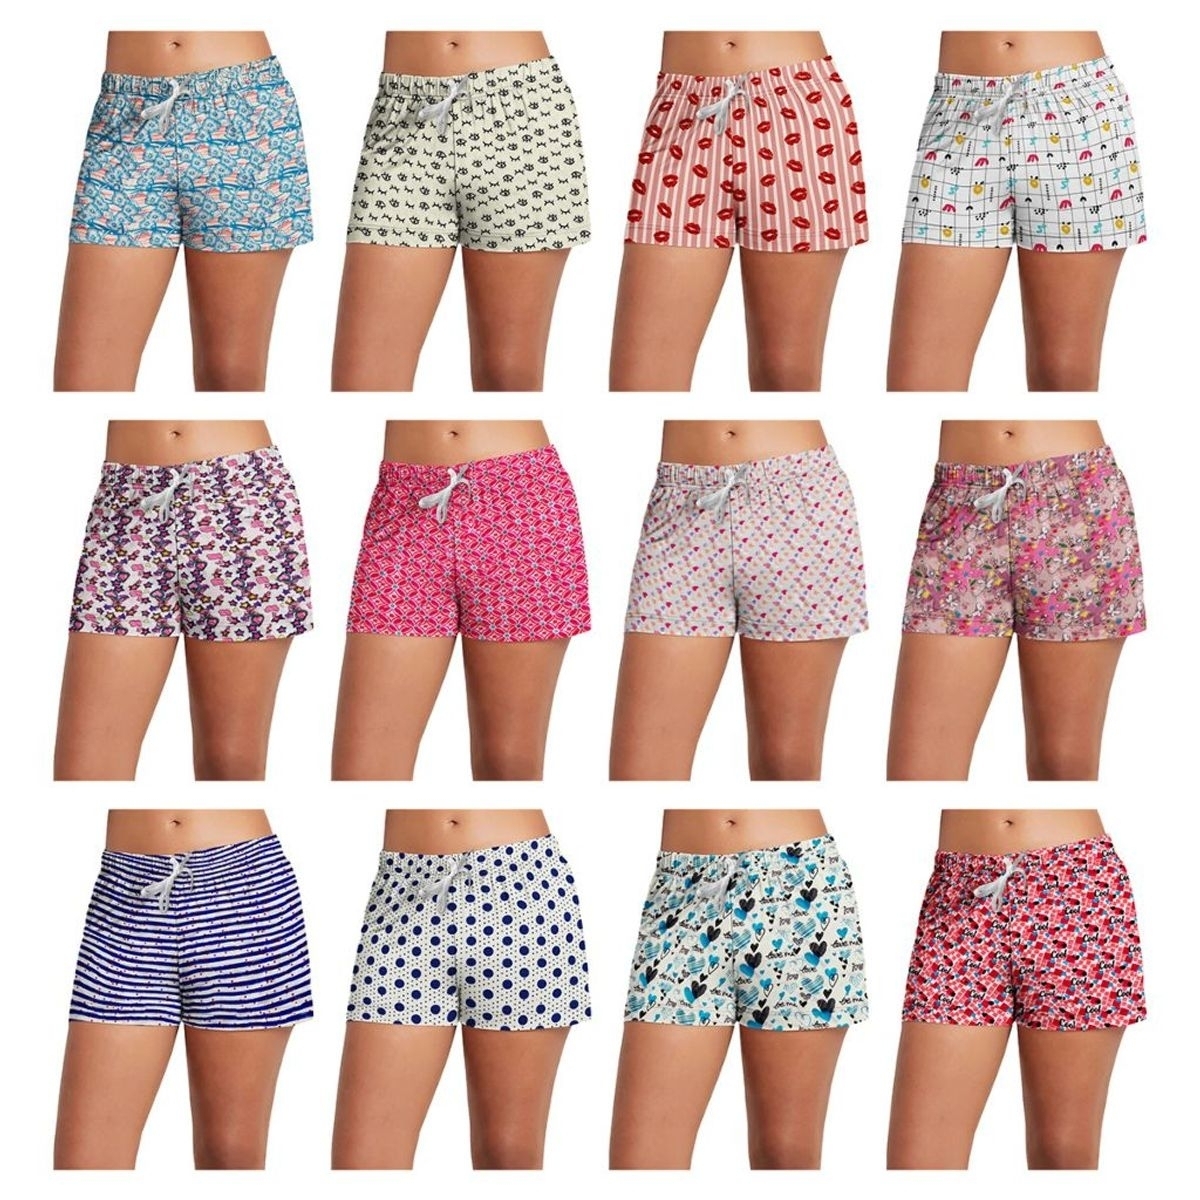 5-Pack: Women's Super-Soft Lightweight Fun Printed Comfy Lounge Bottom Pajama Shorts W/ Drawstring - X-large, Animal